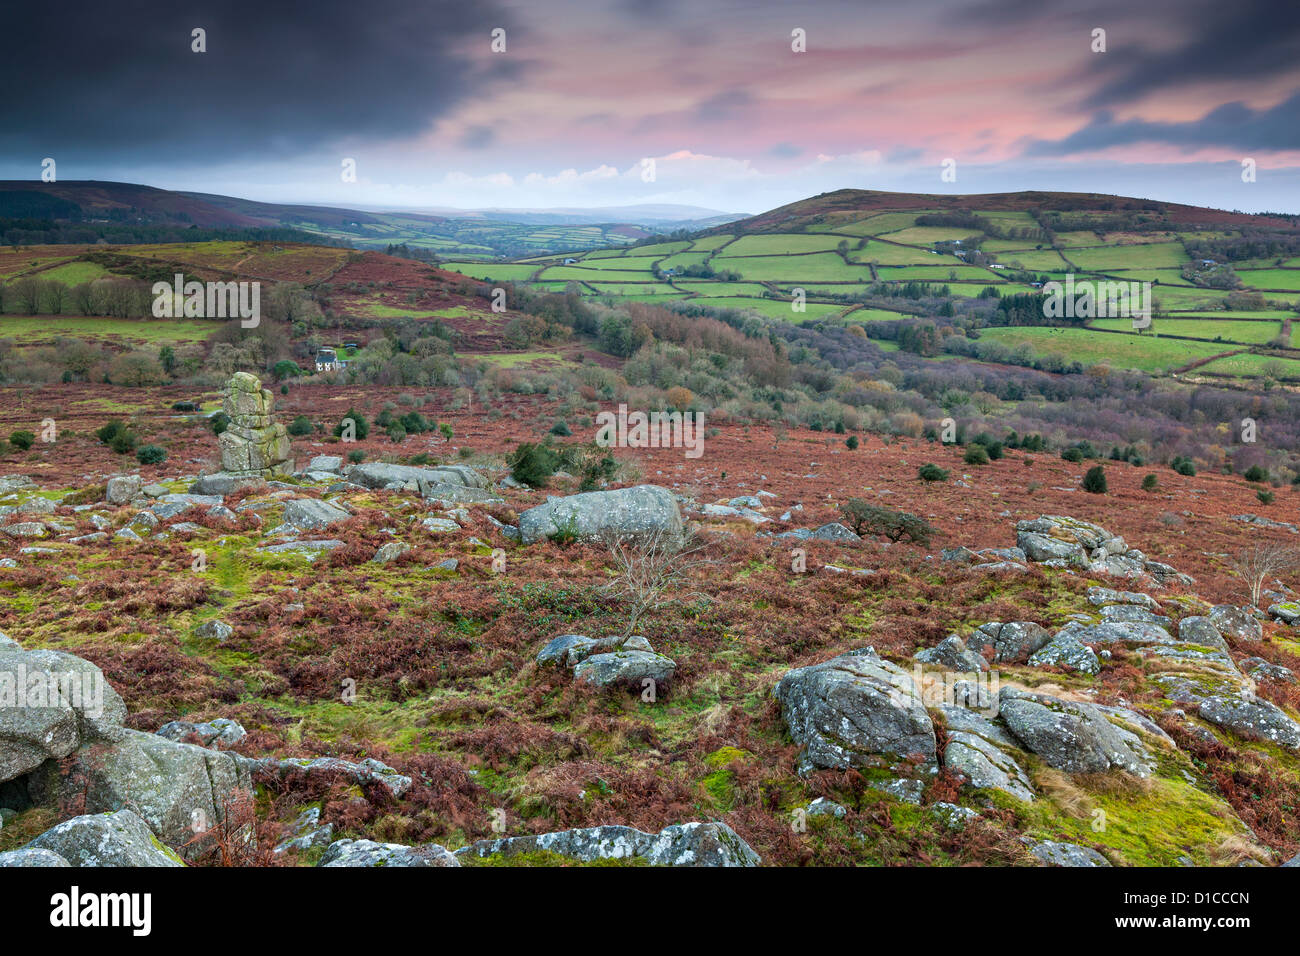 Granite rocks on the moorland at Hayne Down in Dartmoor National Park. Stock Photo